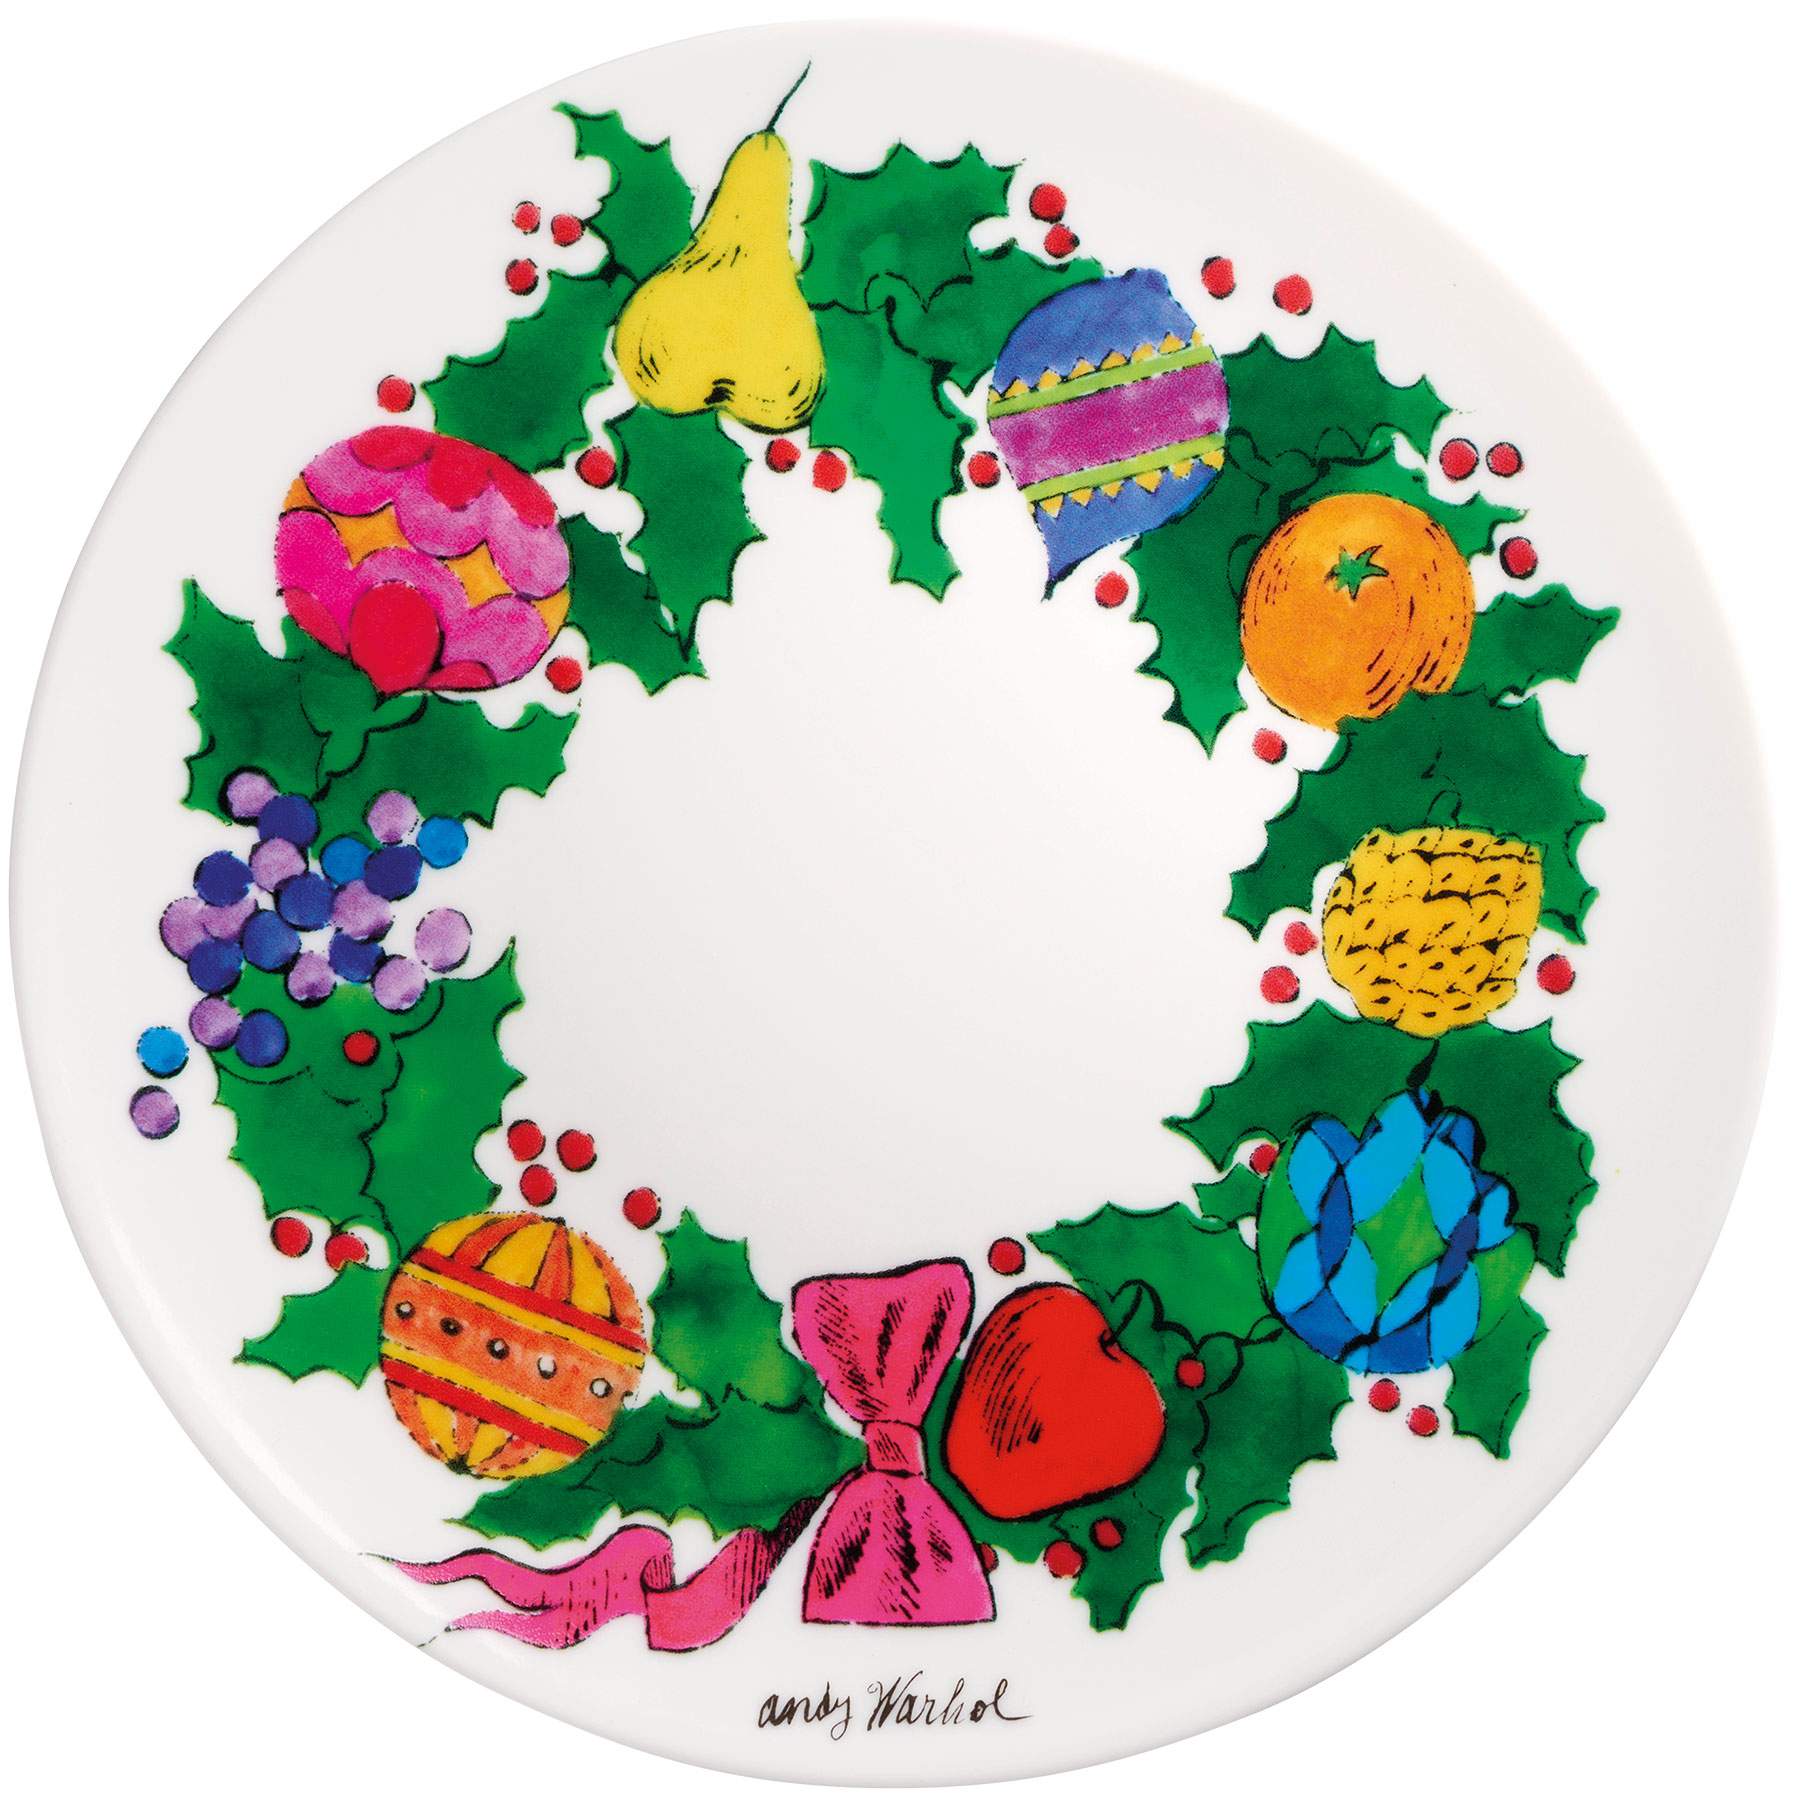 Porzellanteller "Christmas - Wreath" von Andy Warhol